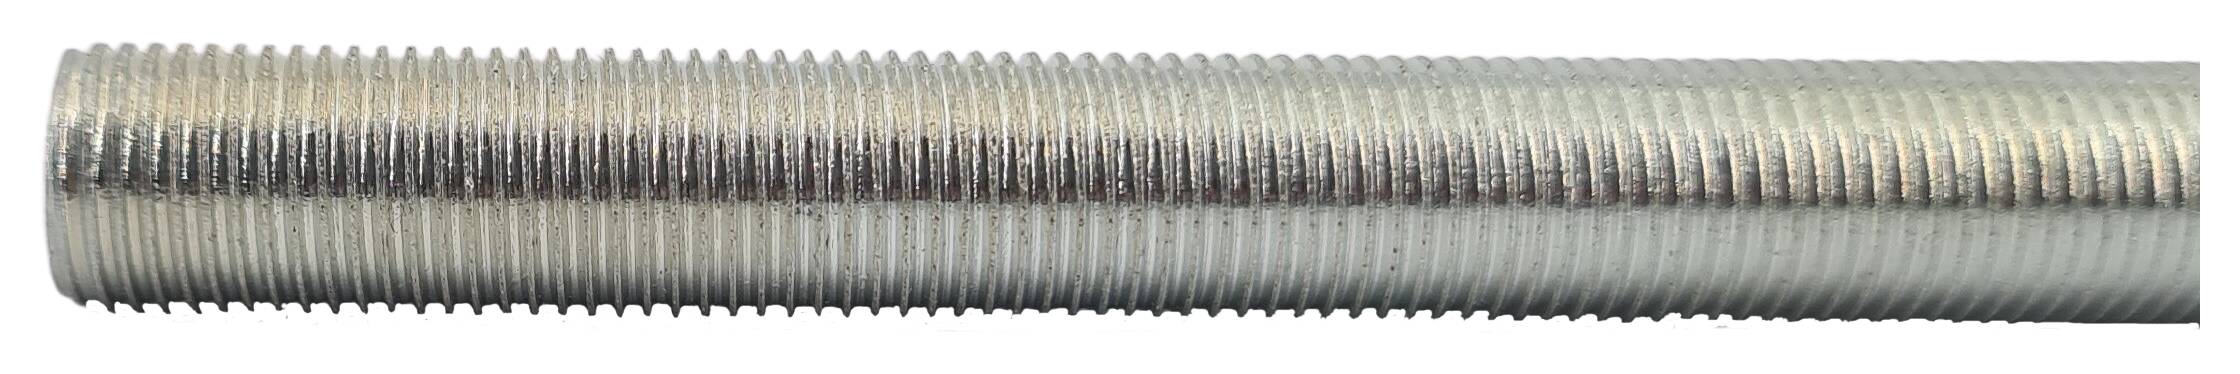 iron thread tube M10x1x310 round zinc